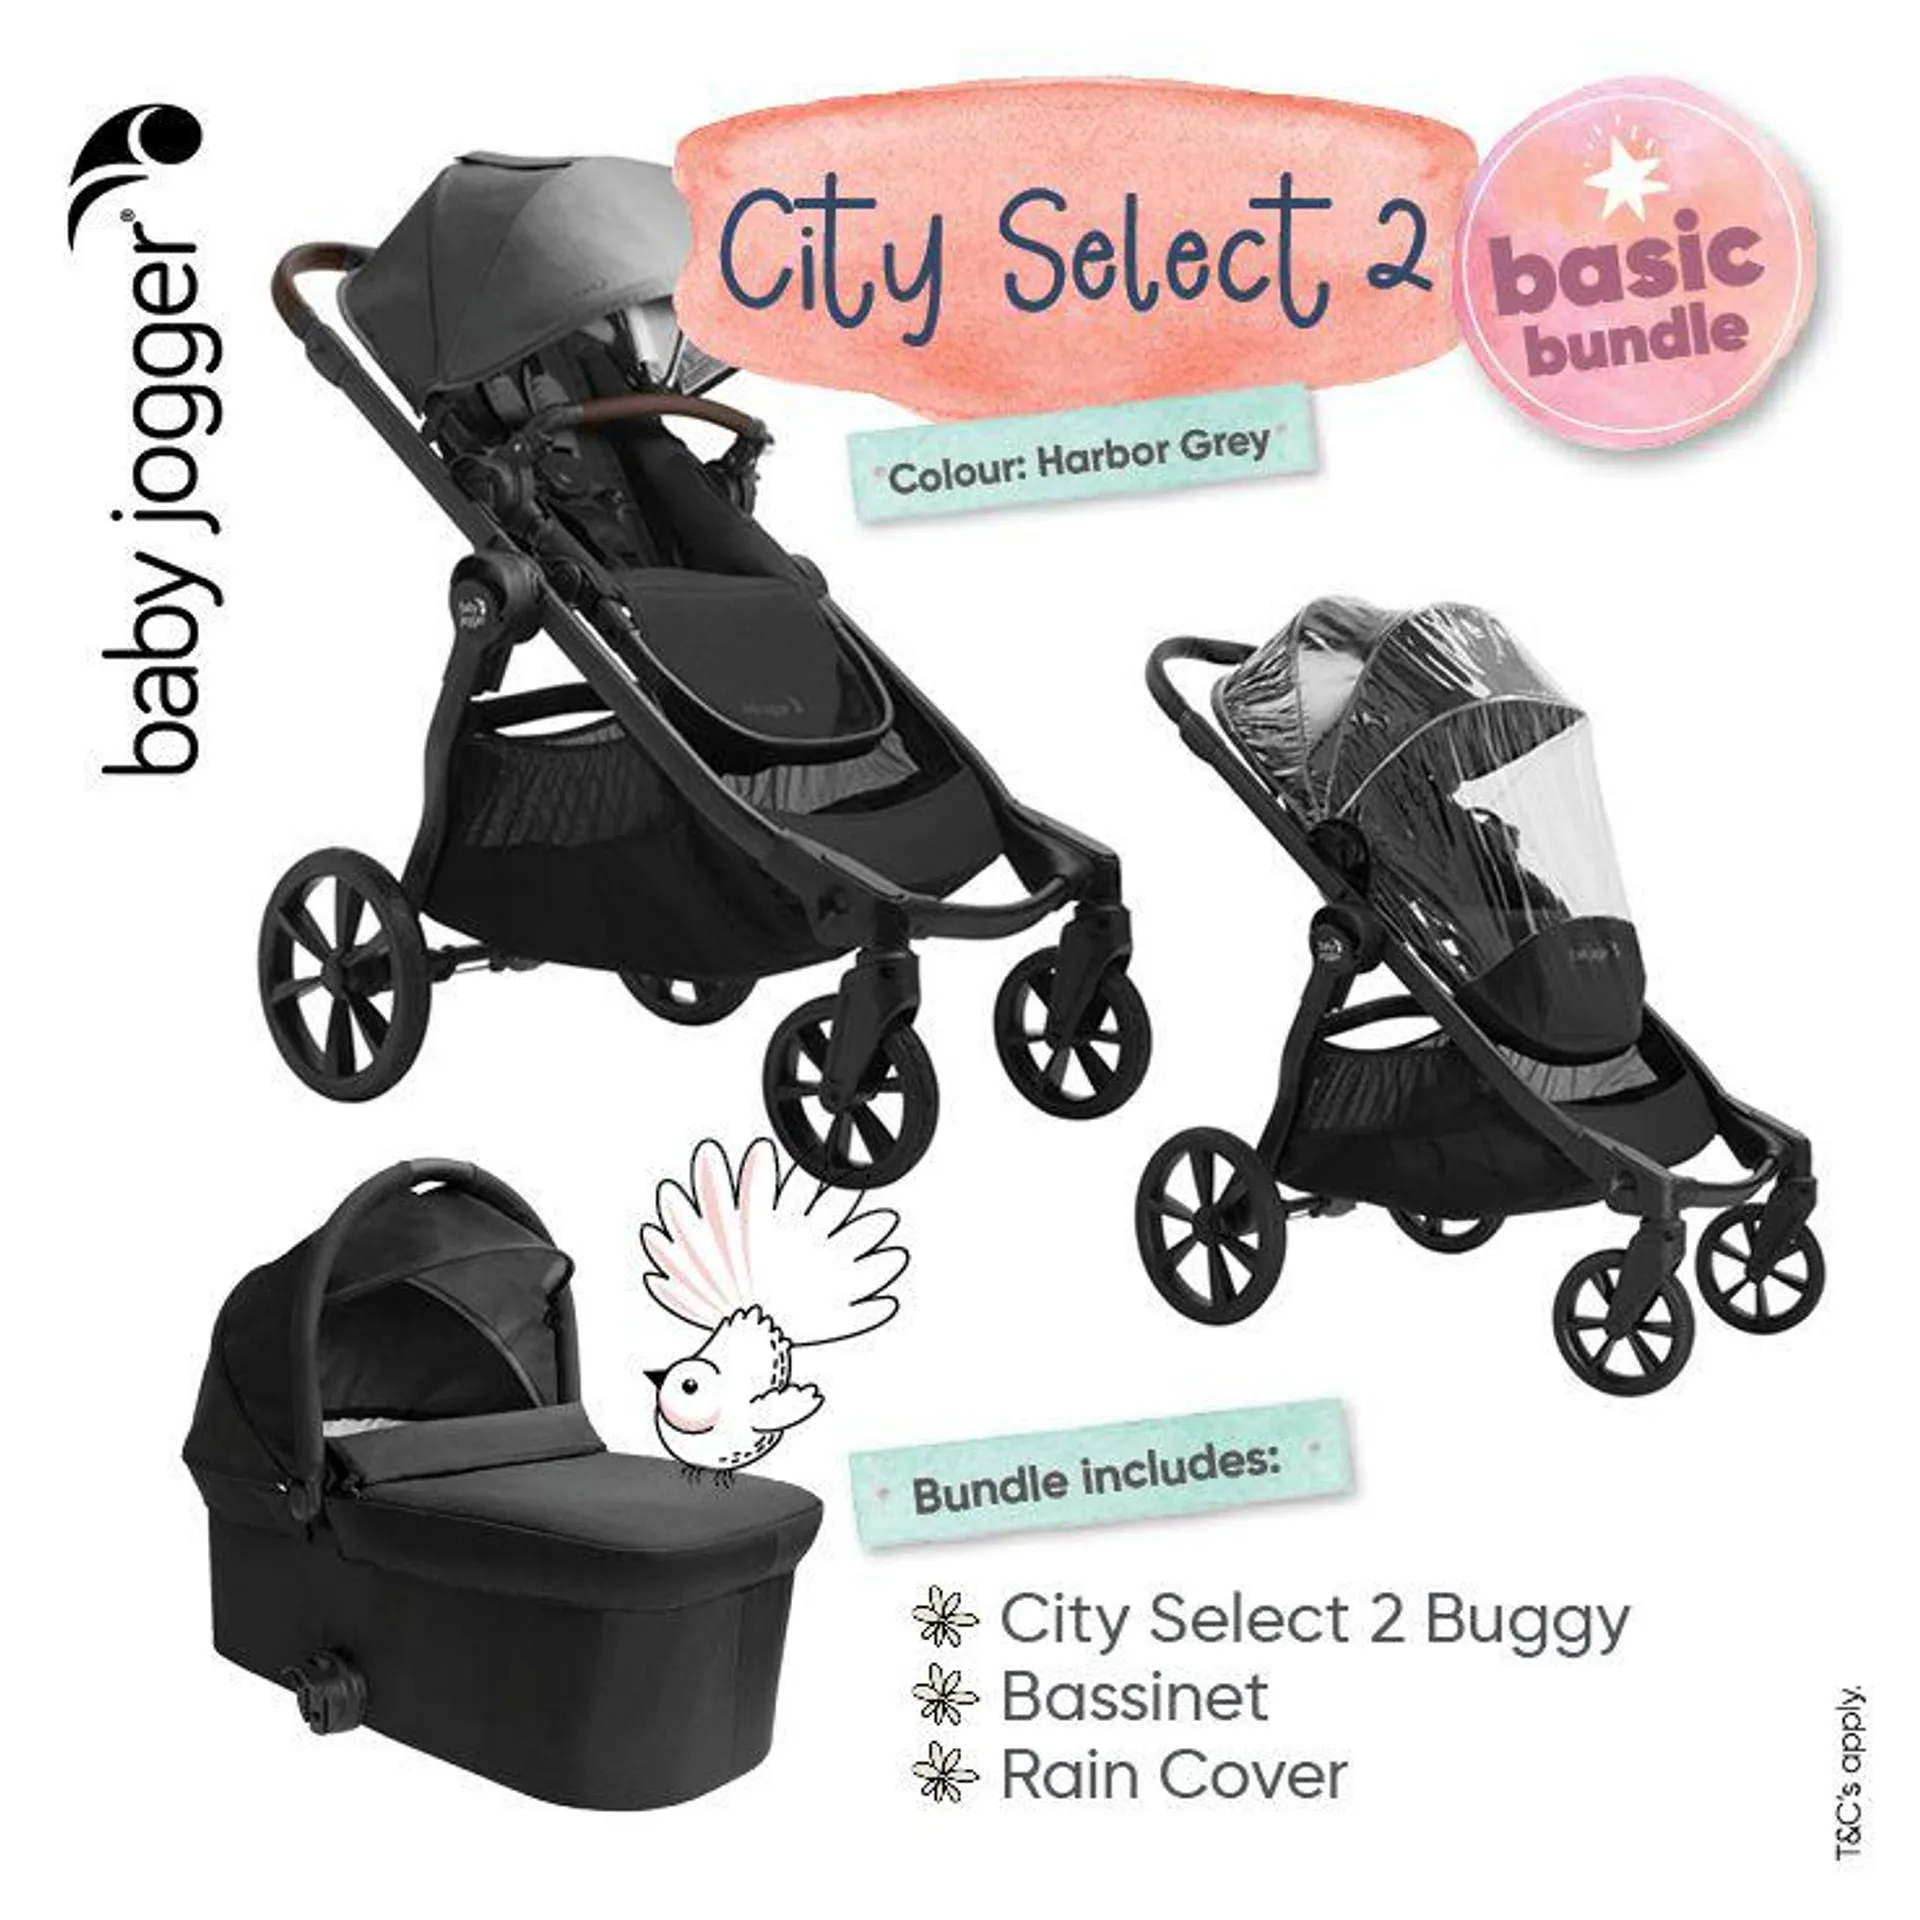 Baby Jogger City Select 2 Basic Bundle - Harbor Grey